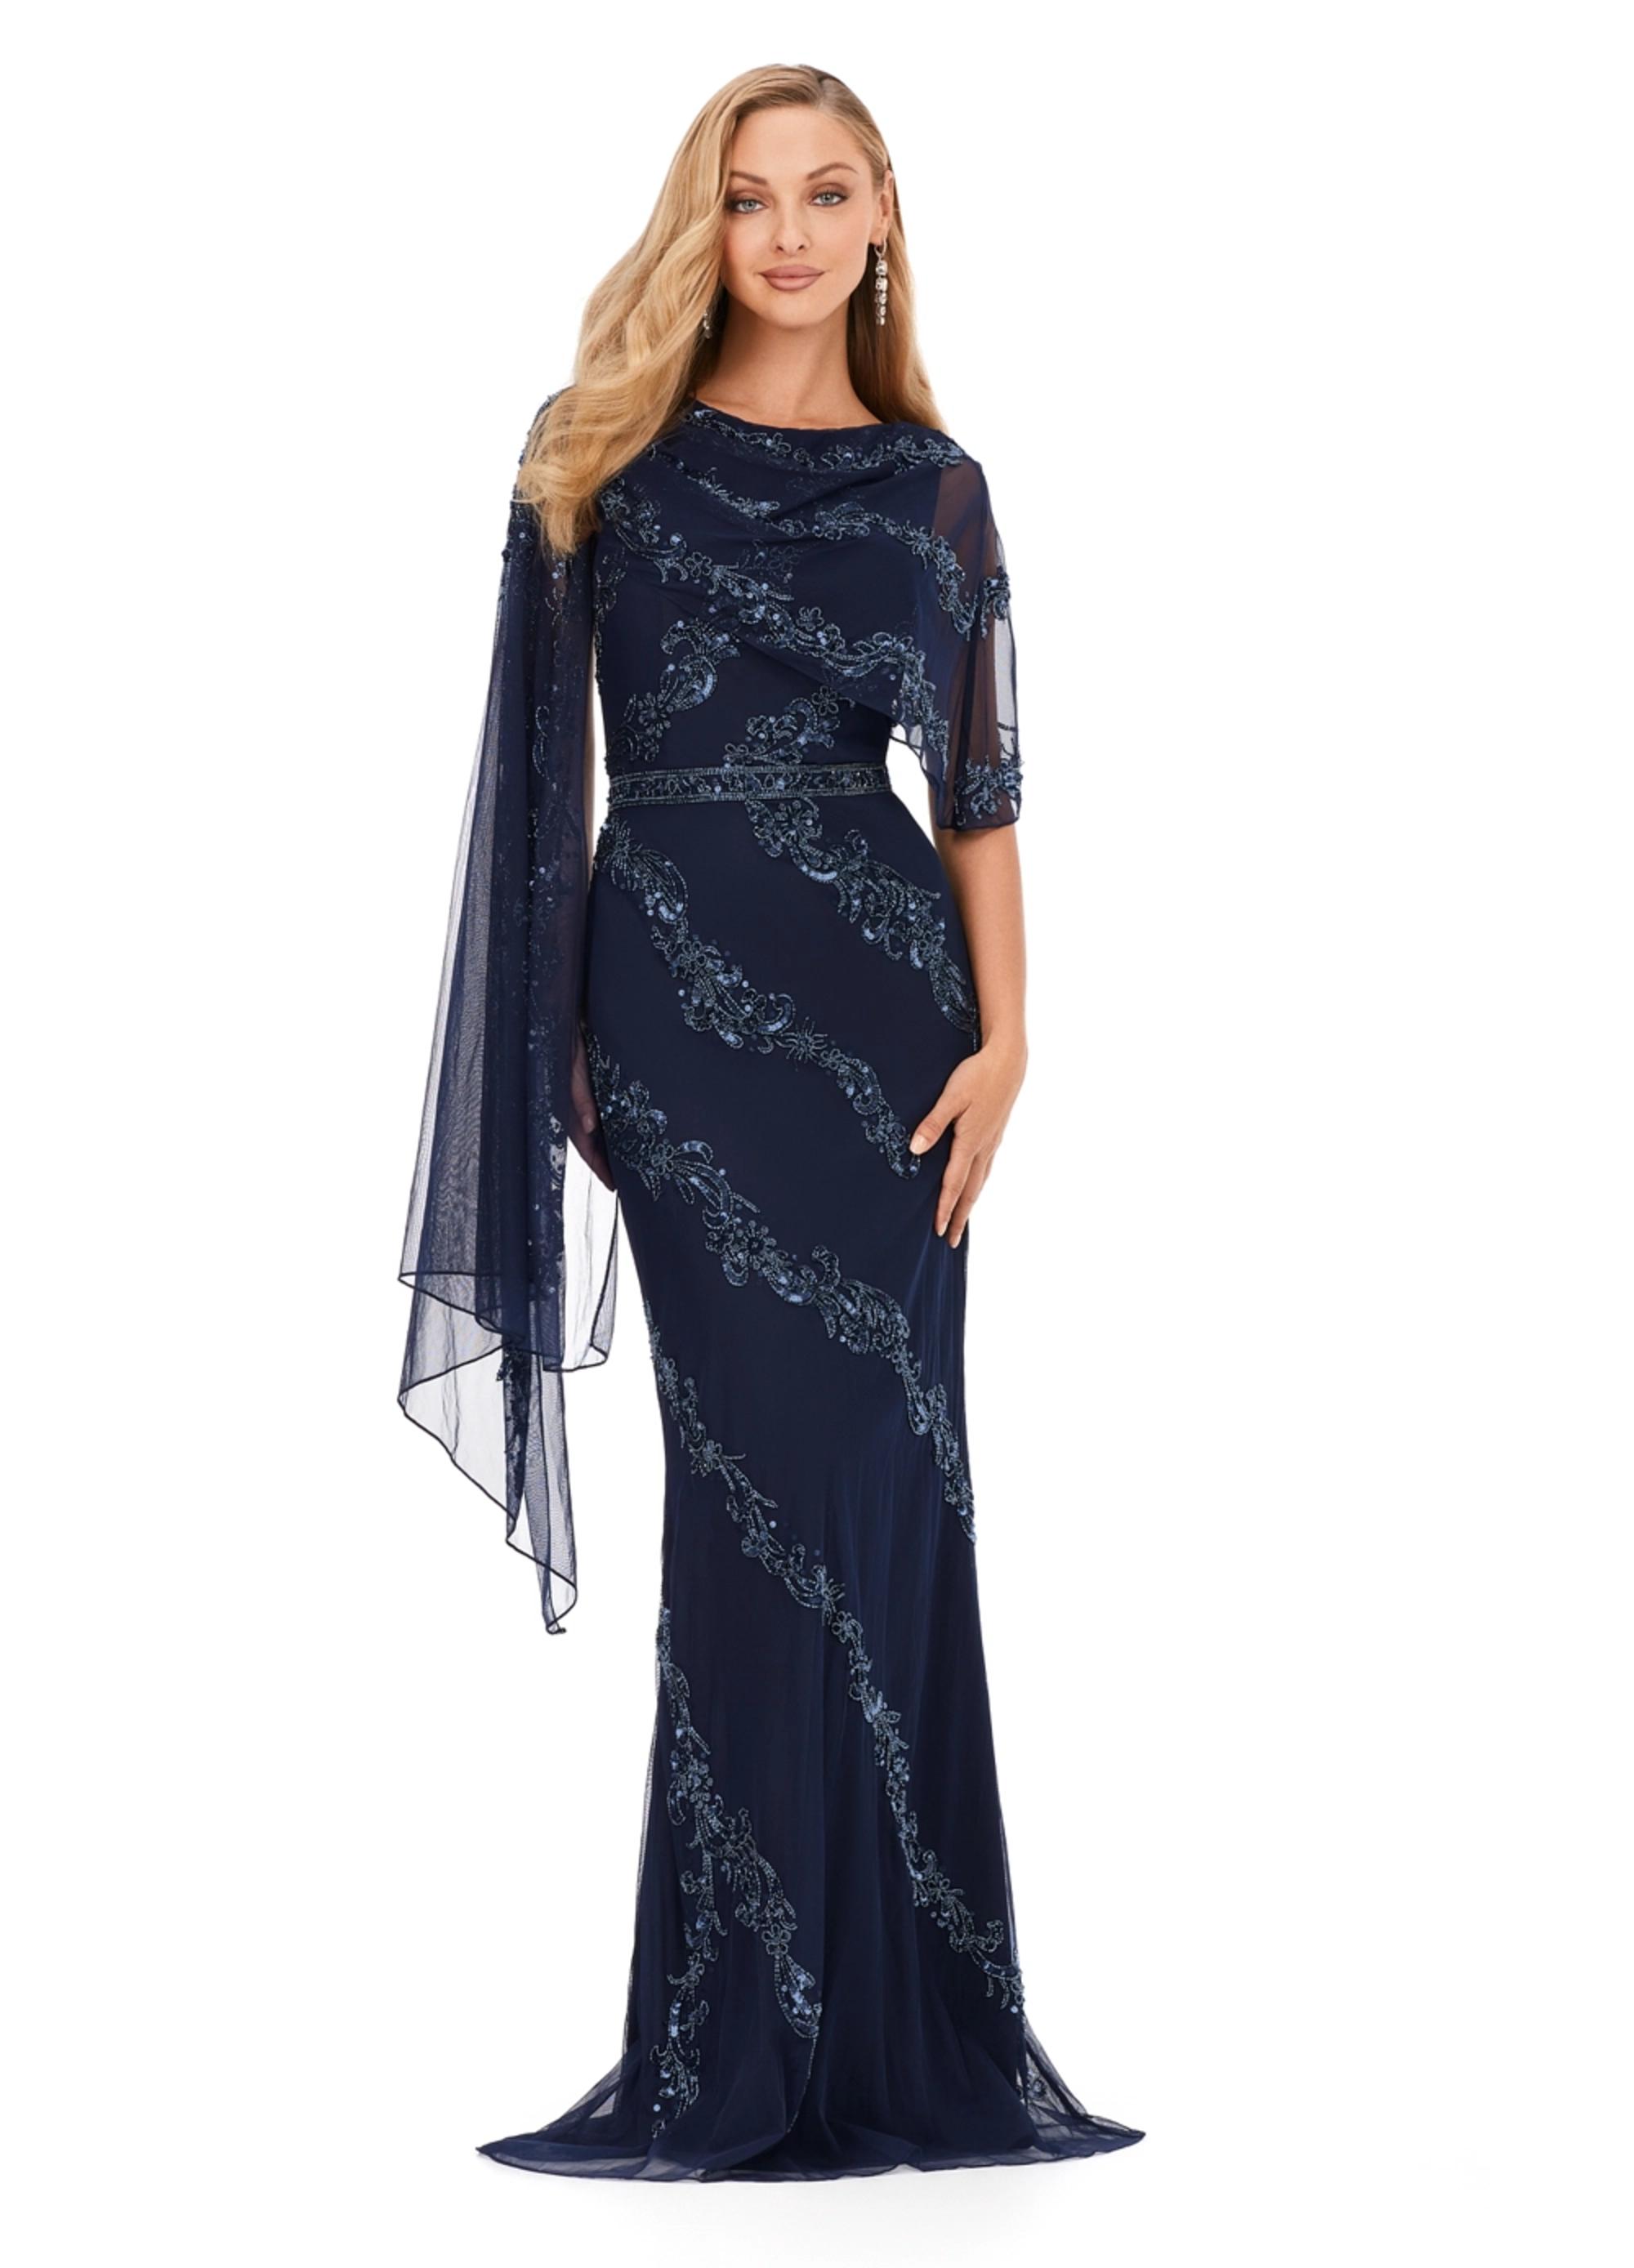 ASHLEYlauren - Beaded Evening Gown with Asymmetrical Overlay | ASHLEYlauren